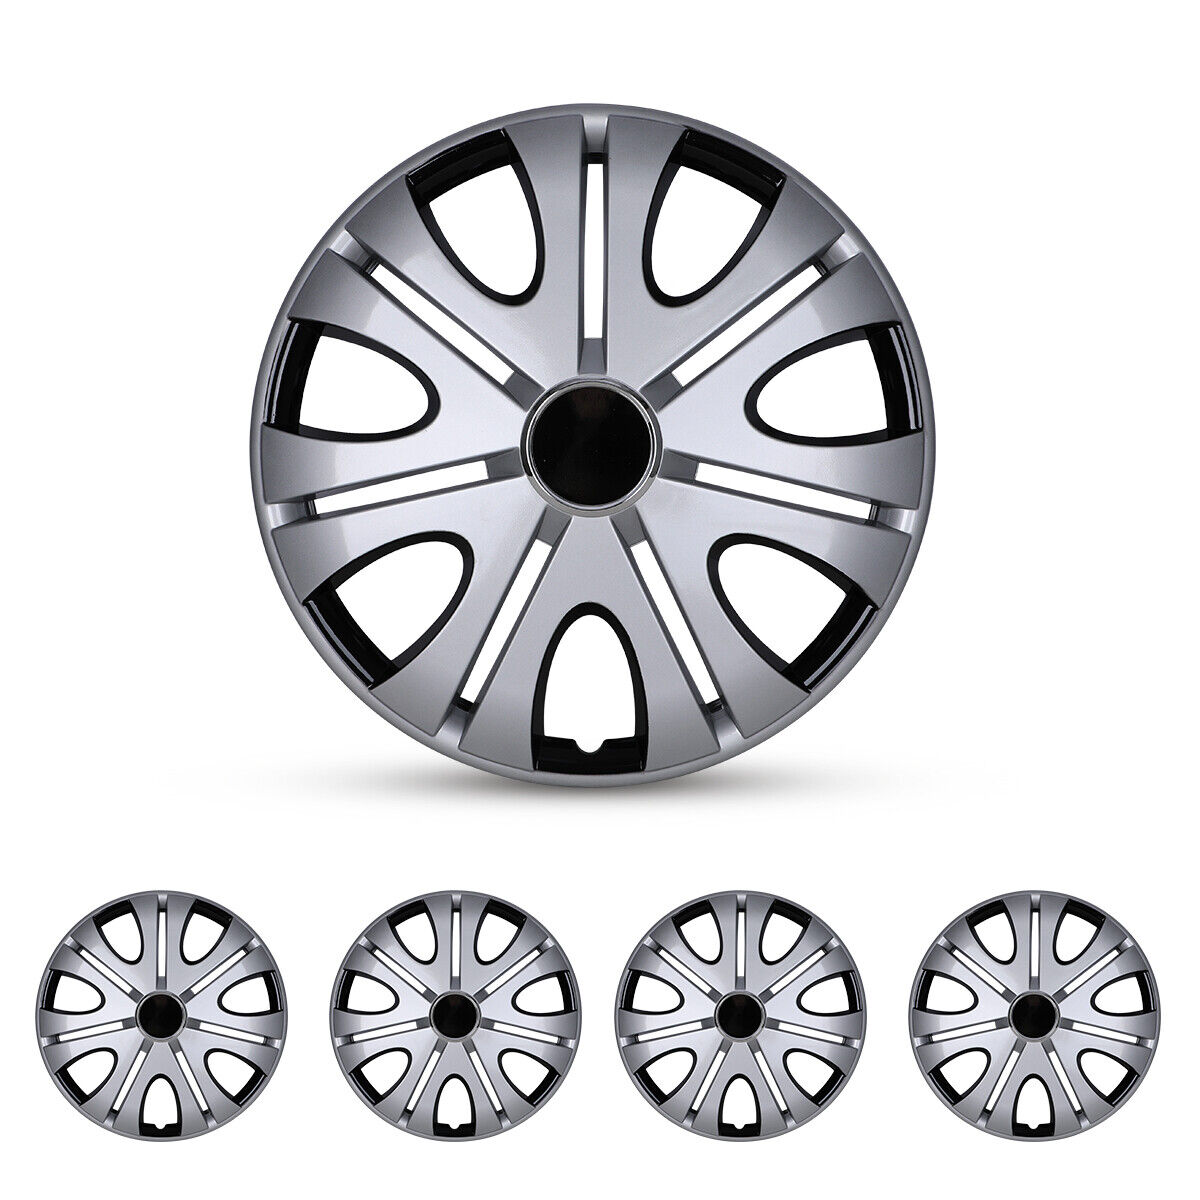 15in Universal Hubcap Wheel Cover (Set of 4) For 15 inch Standard Steel Wheels